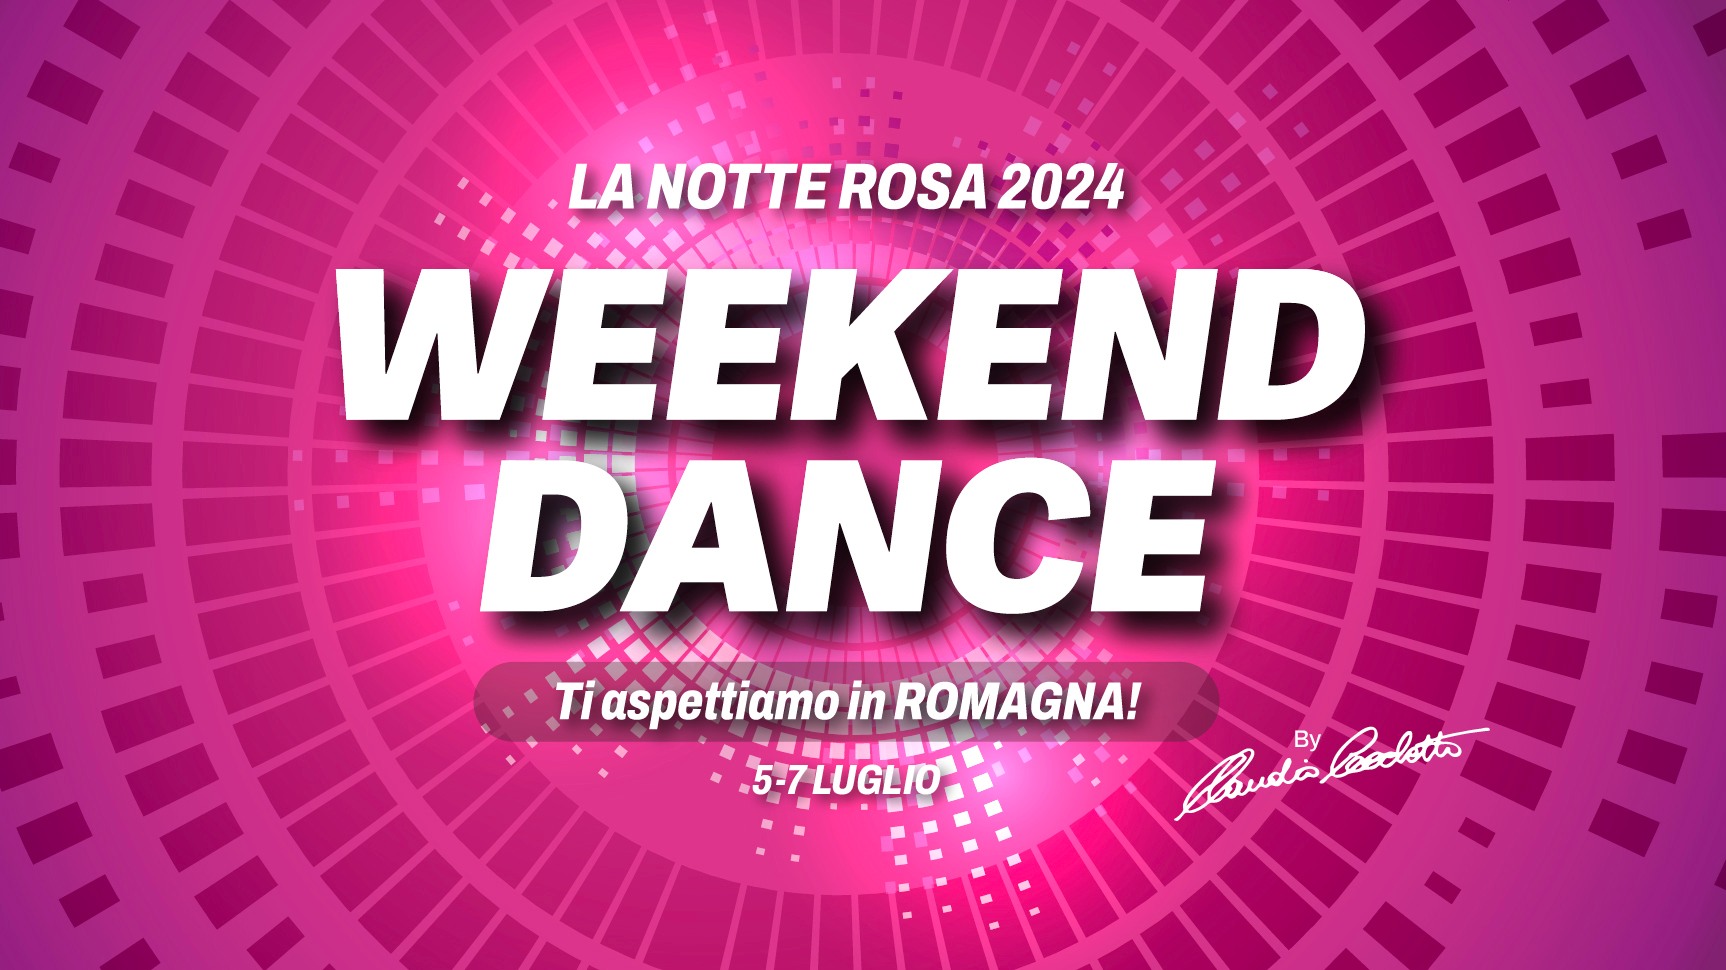 Notte Rosa 2024 - Weekend Dance